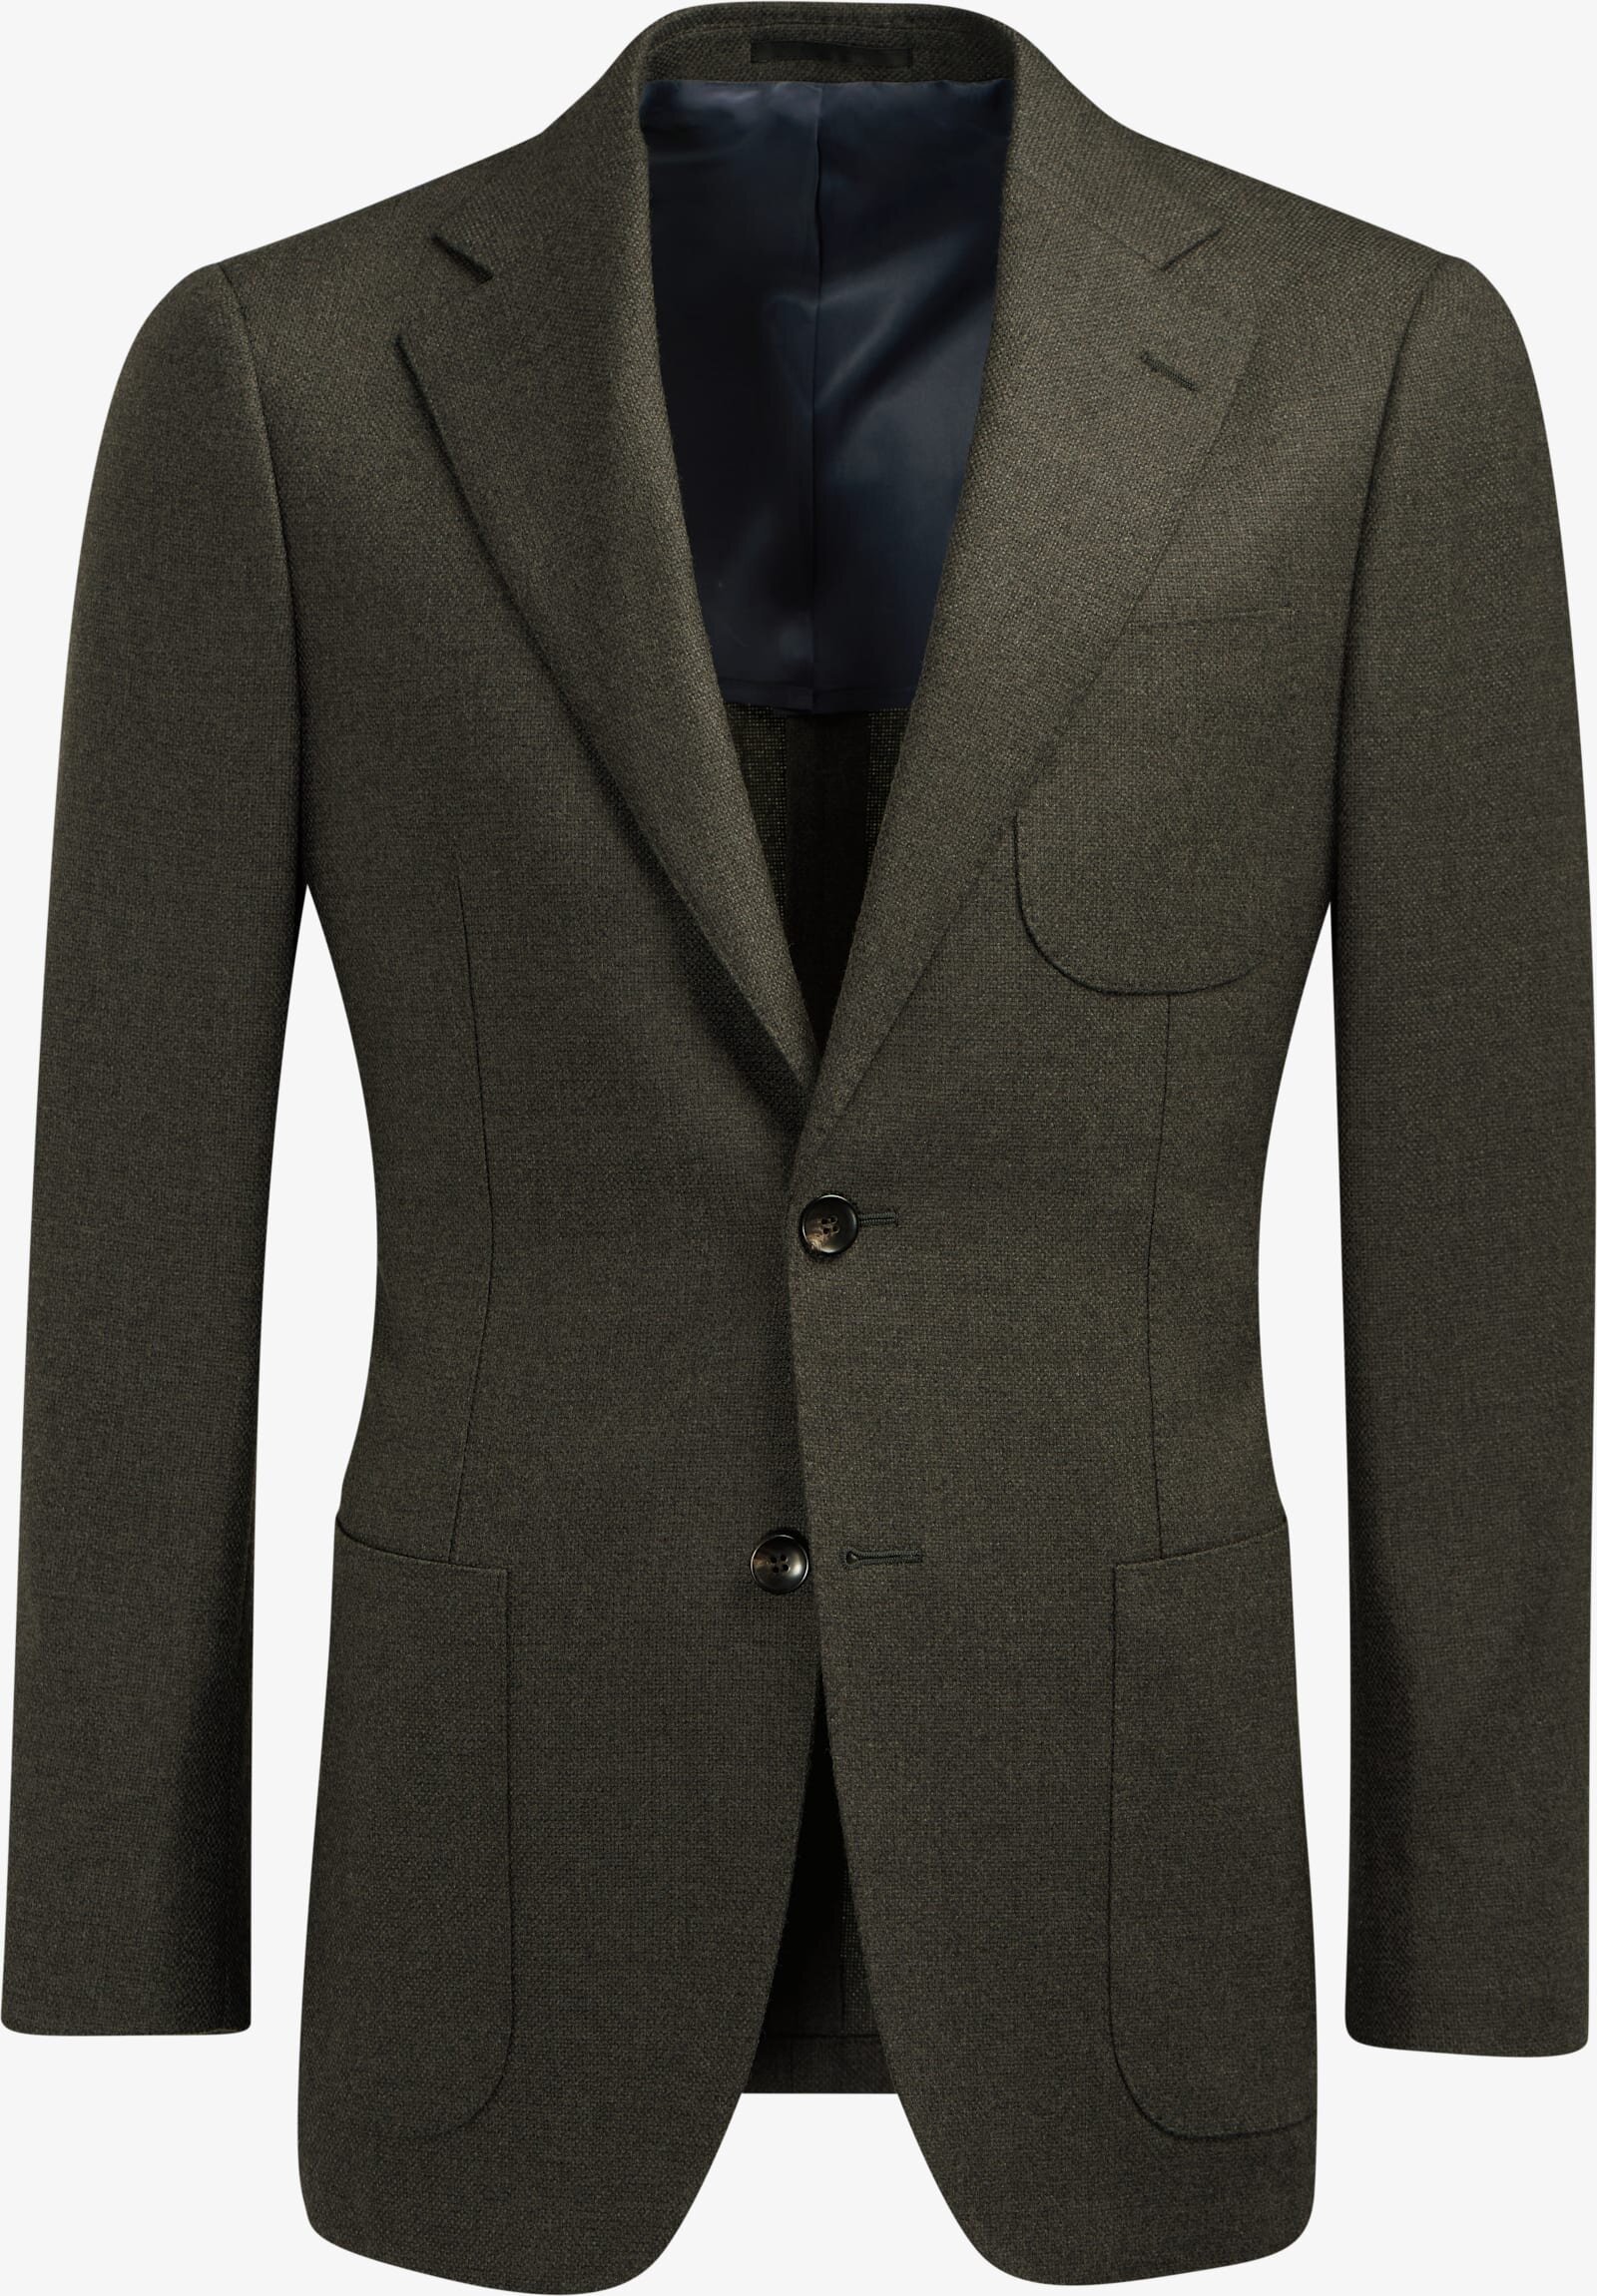 Suit Supply Olive blazer.jpg